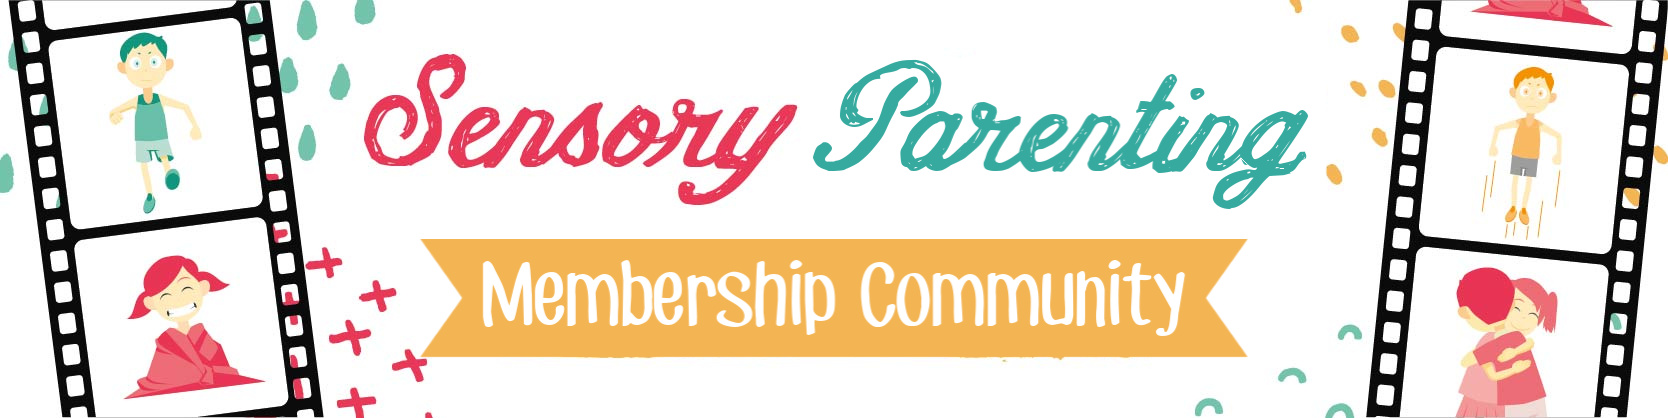 Sensory Parenting Membership Community